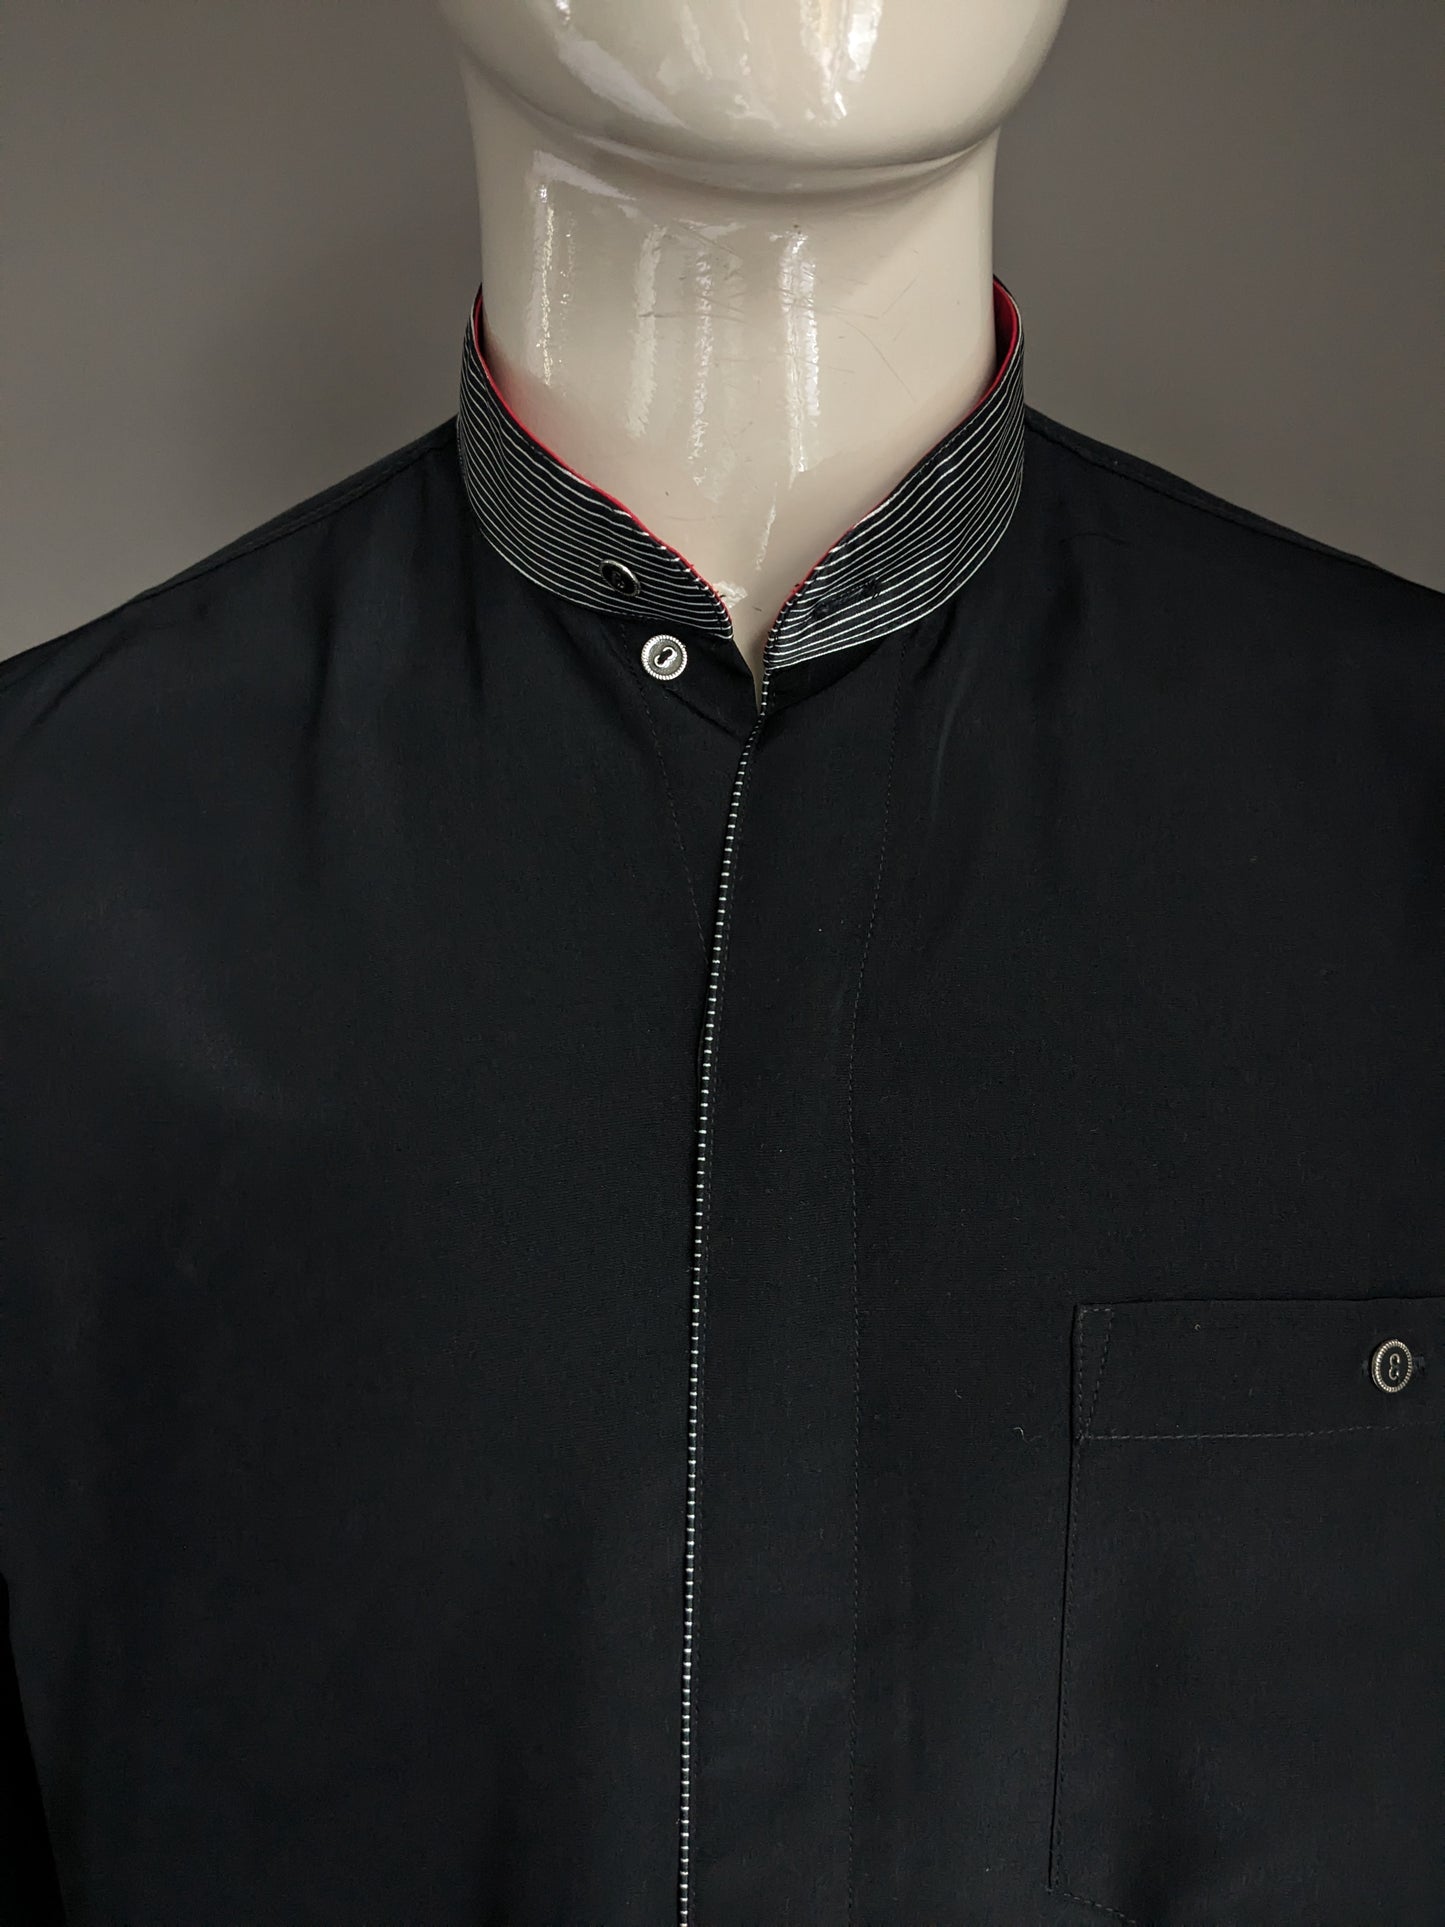 Camisa de leche vintage vertical / agricultores / cuello mao. Negro. Tamaño xl.